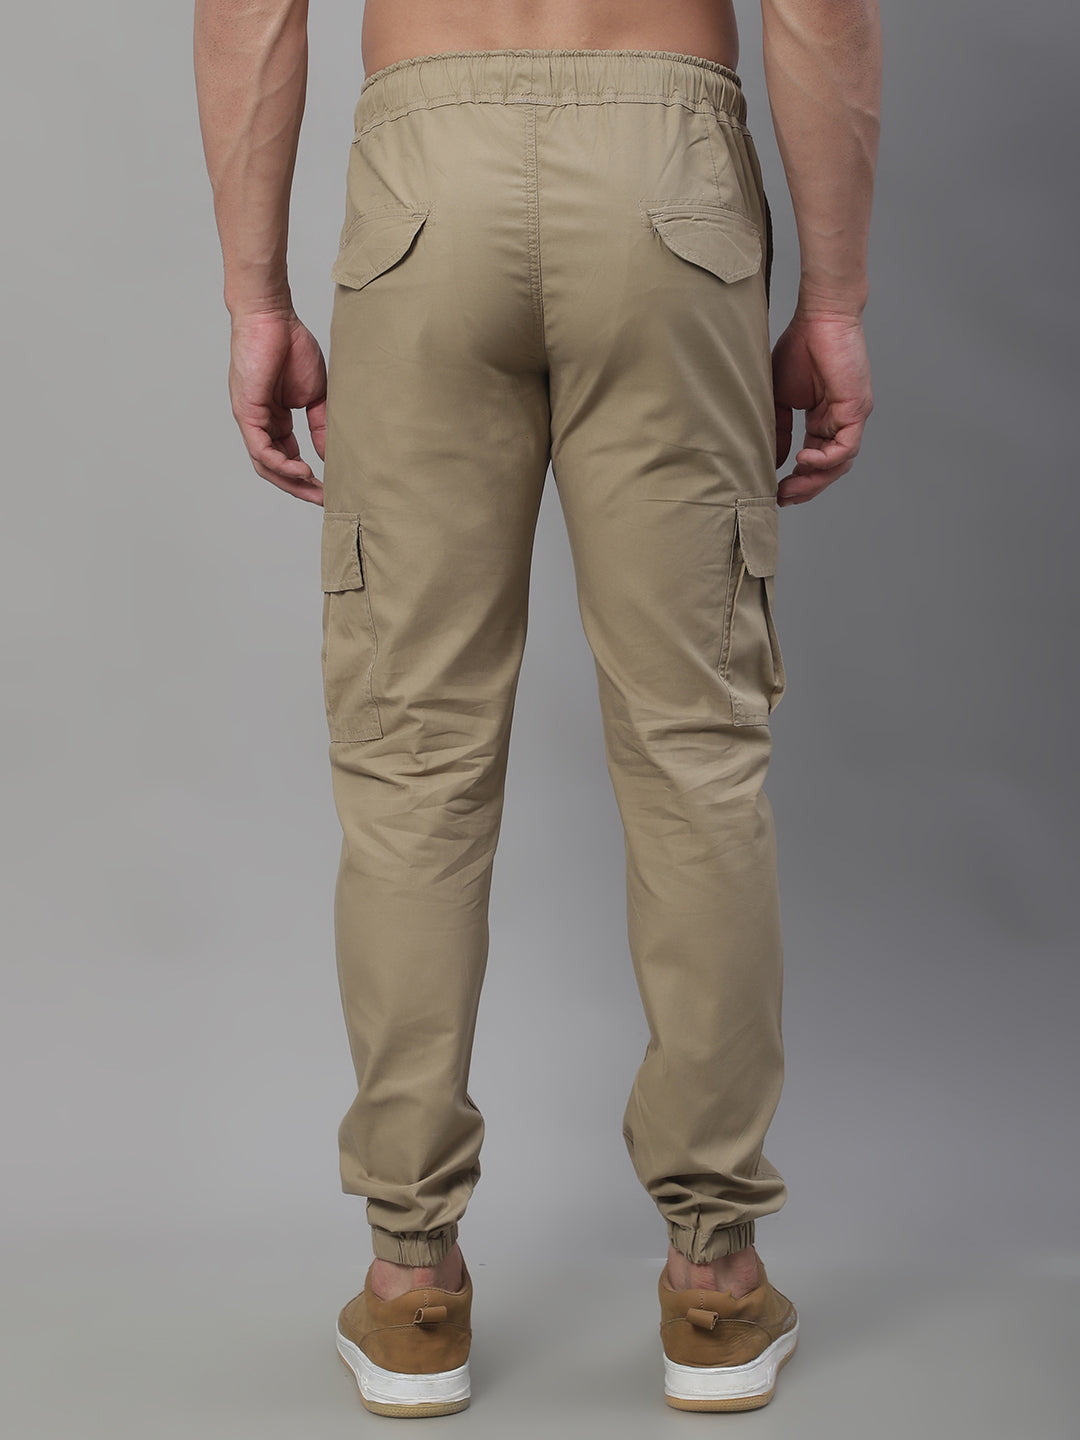 Jainish Men's Casual Cotton Solid Cargo Pants